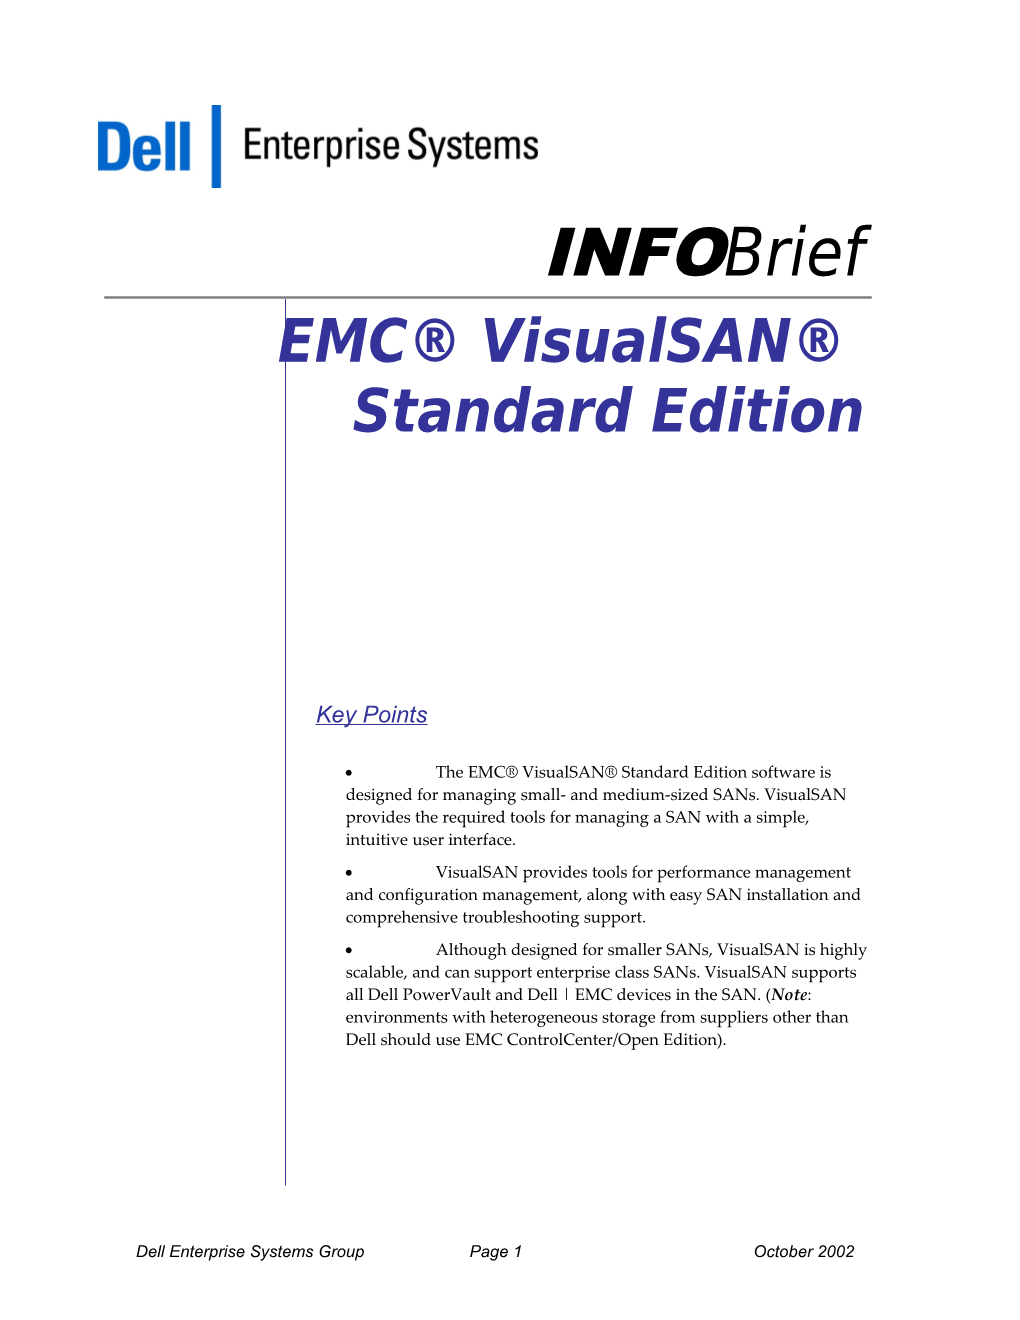 EMC Visualsan Infobrief